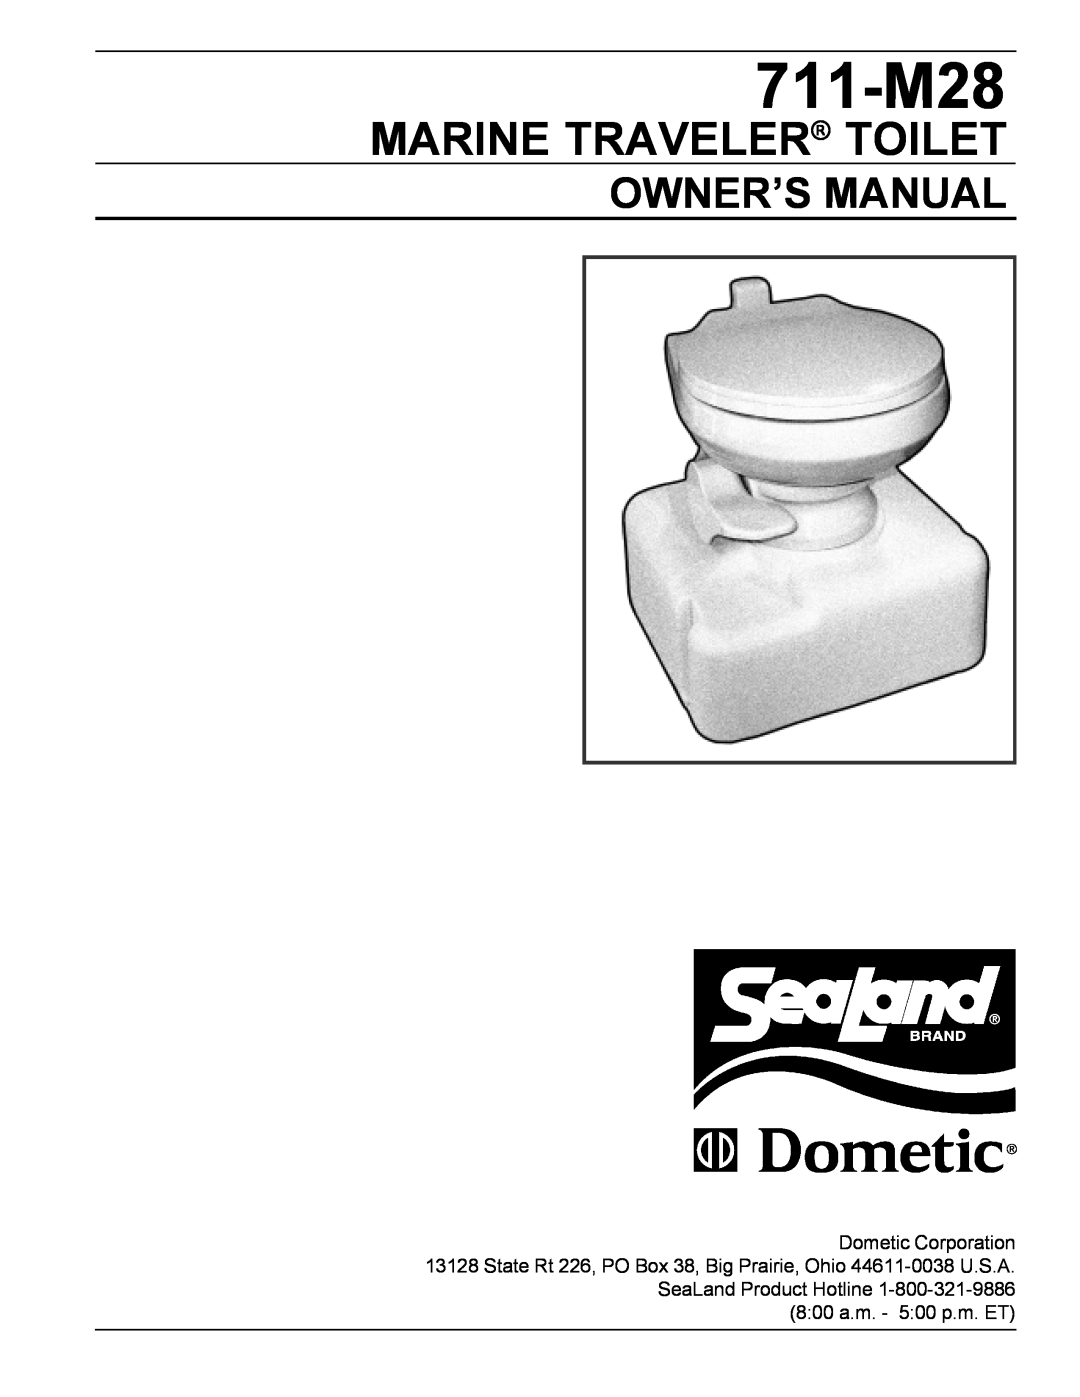 SeaLand 711-M28 owner manual Marine Traveler Toilet 